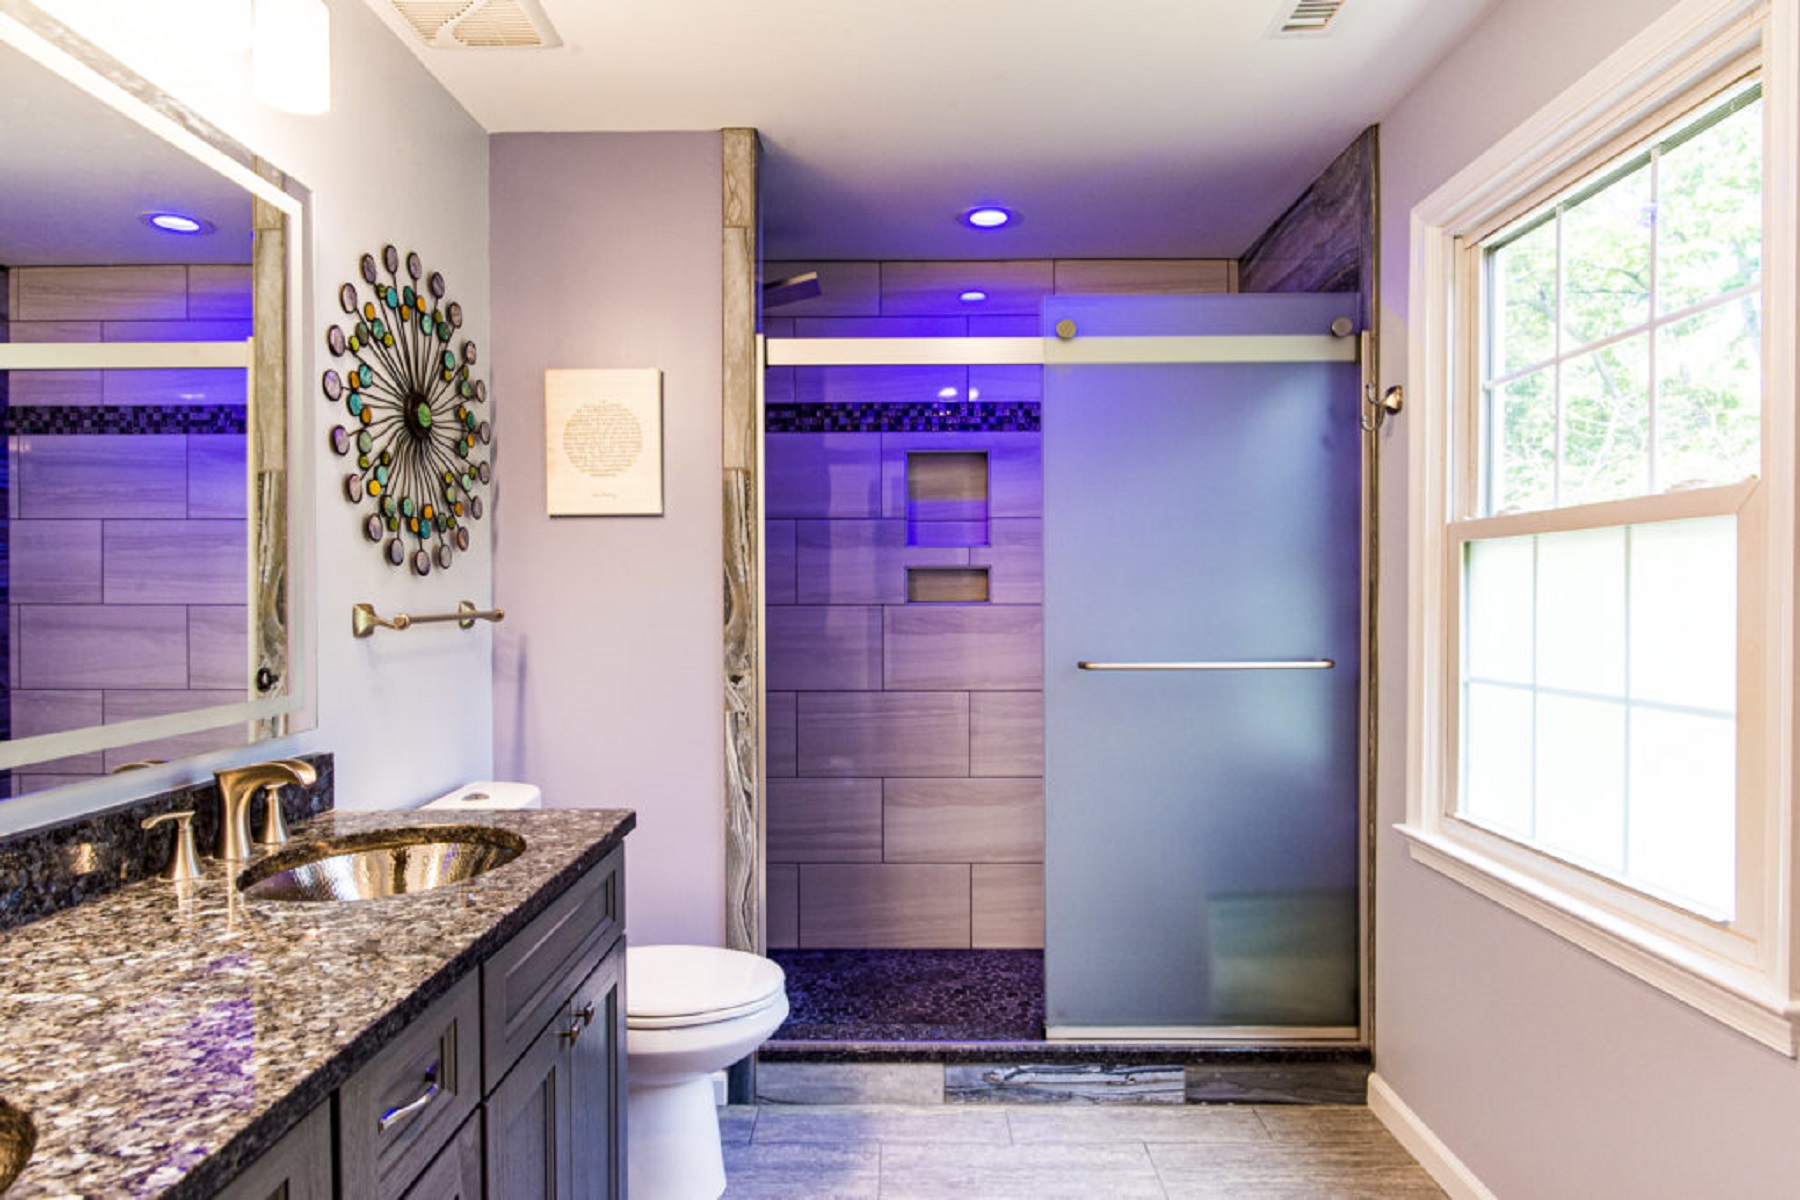 Designer Tips to Make a Small Bathroom Better